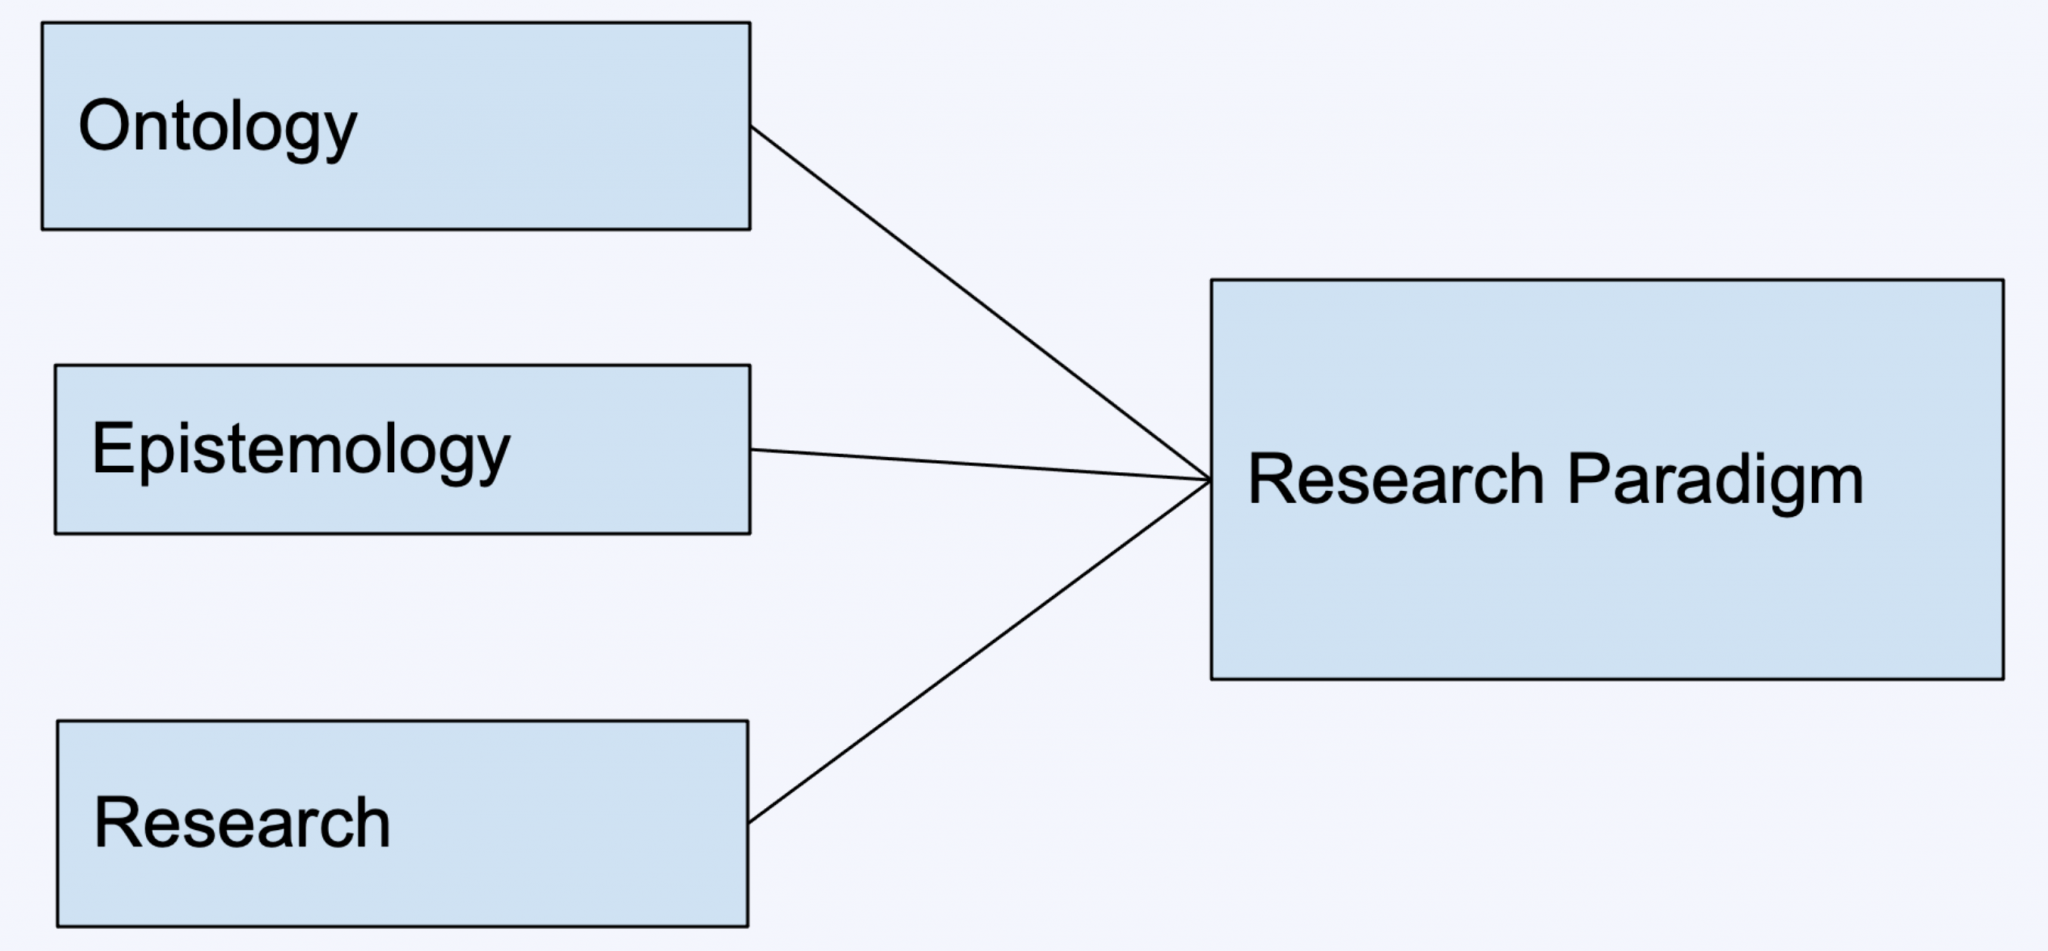 critical research paradigm definition